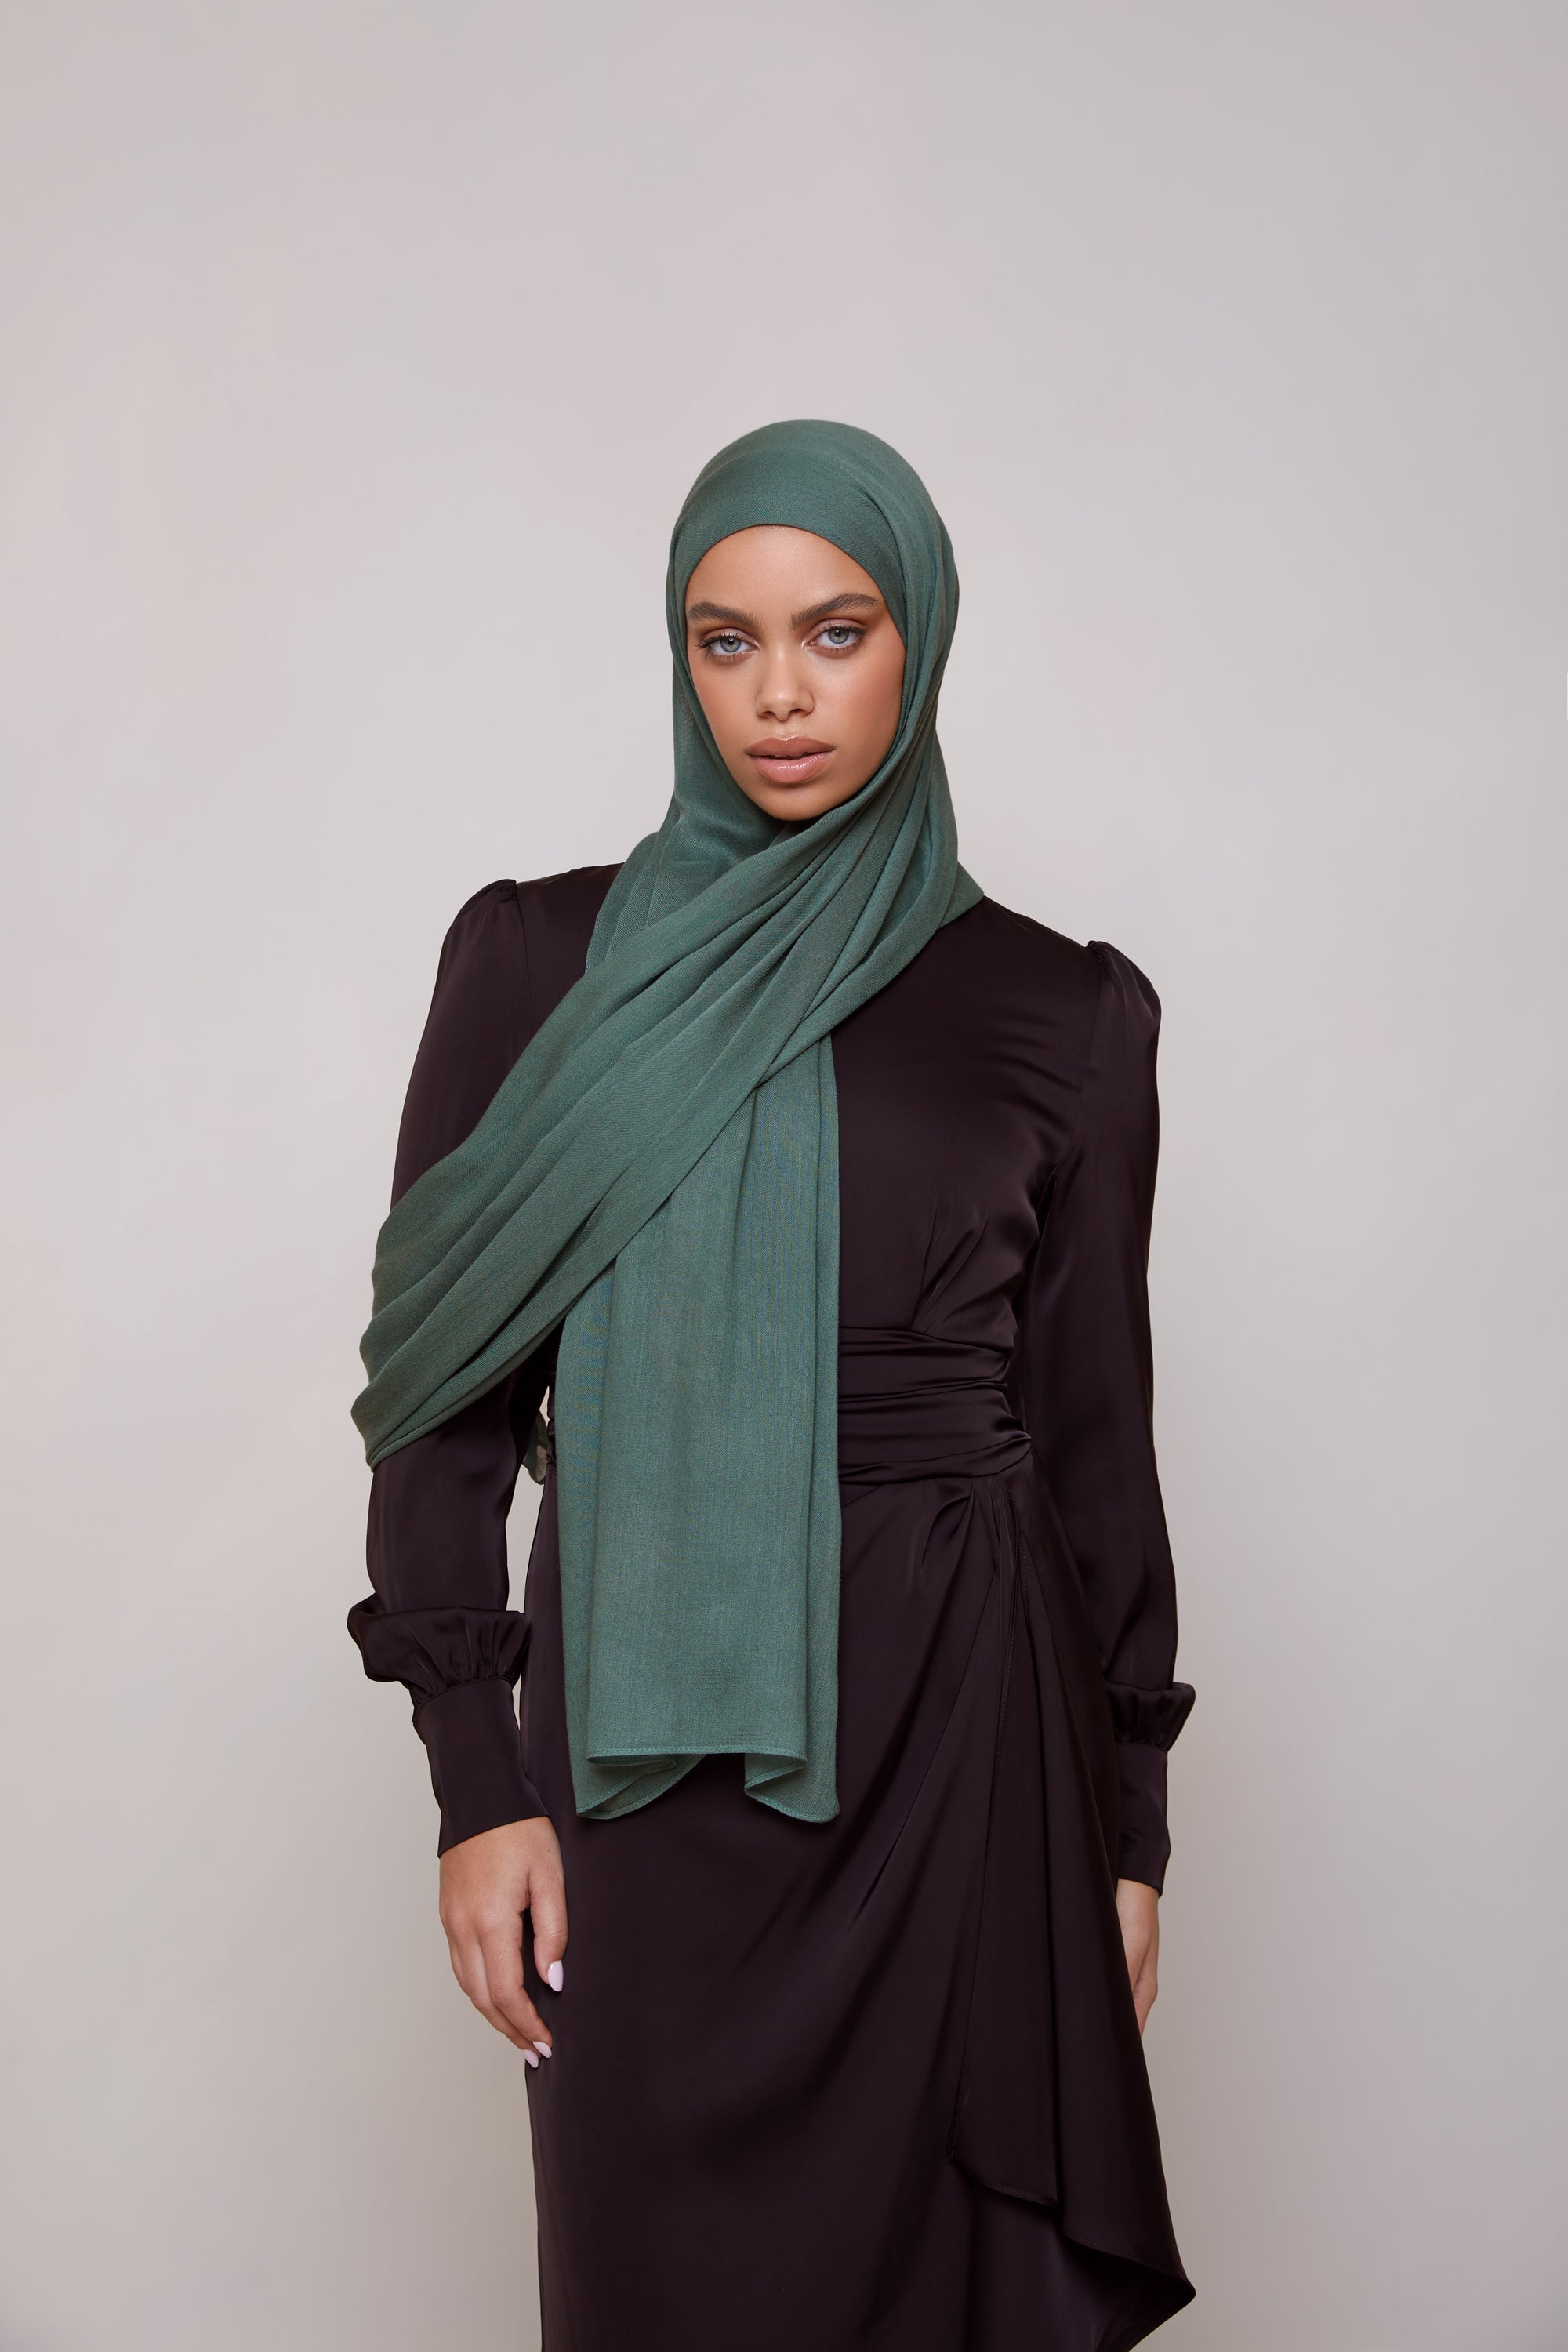 Modal Hijab - Dark Forest epschoolboard 